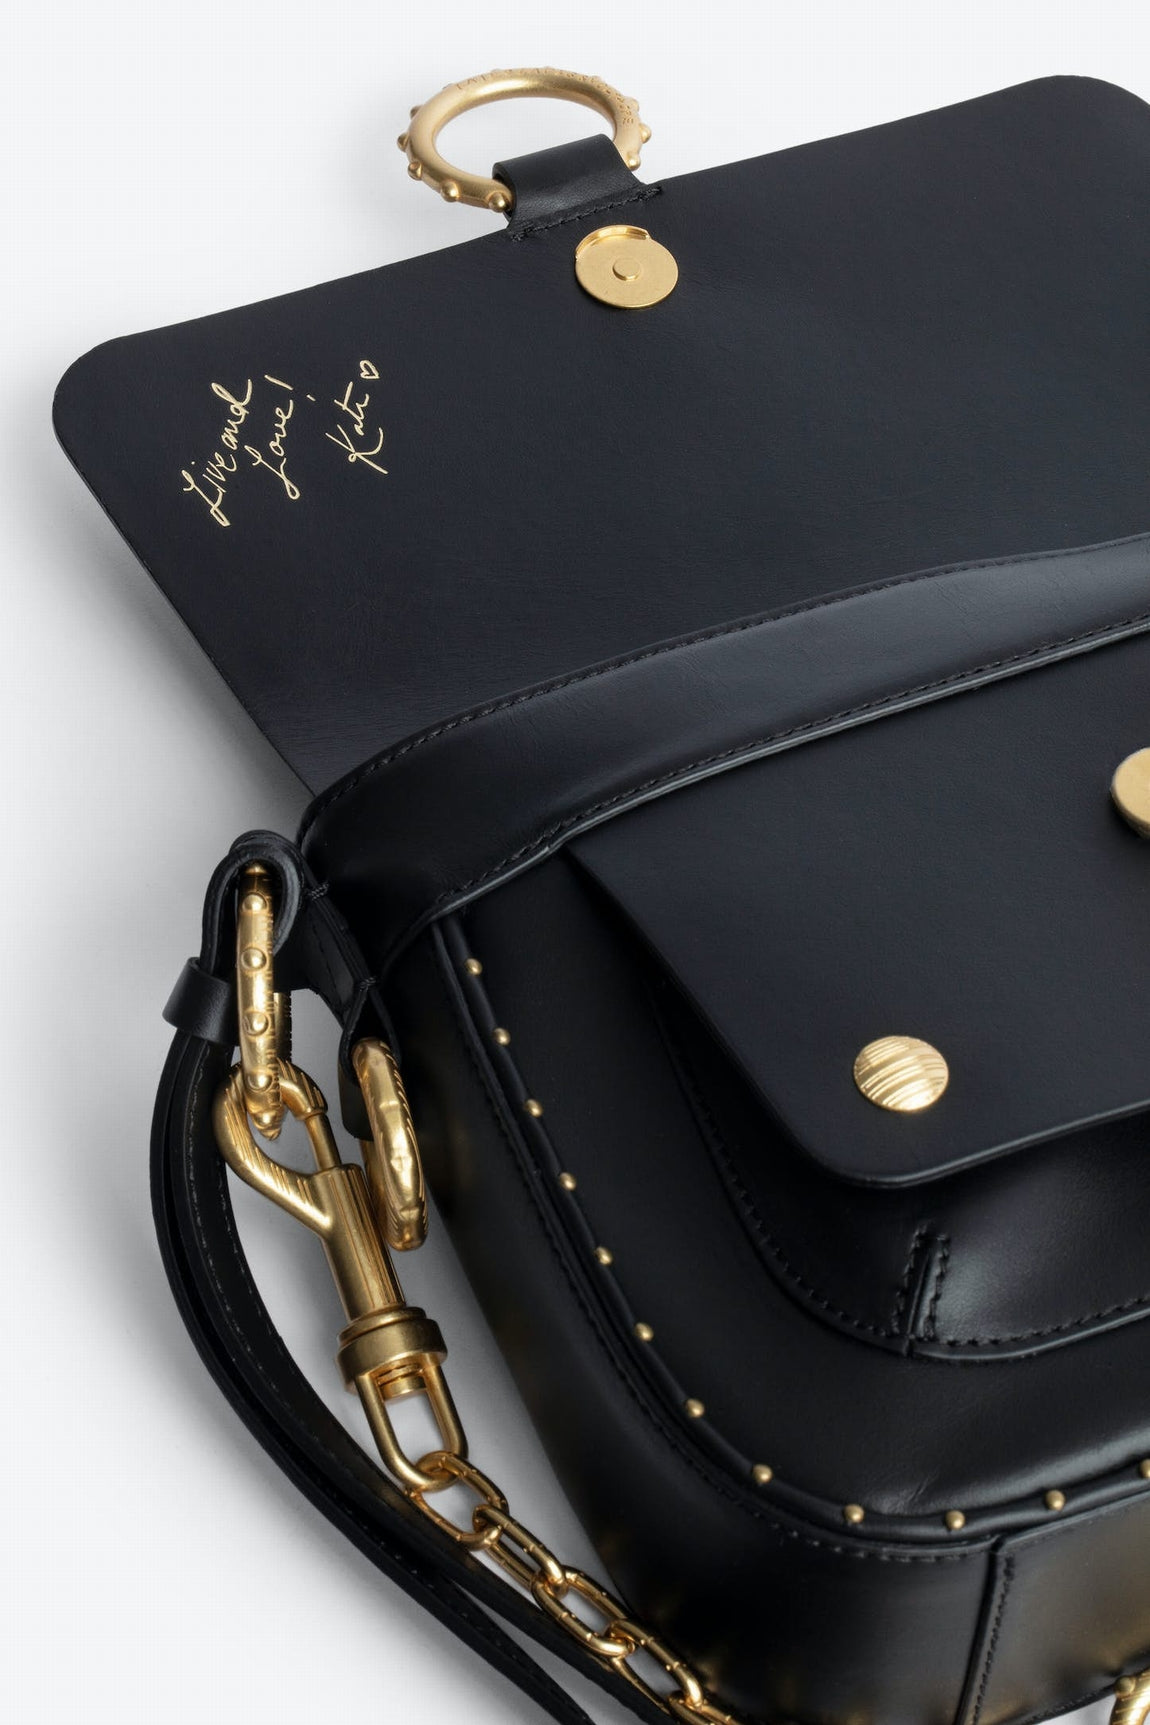 Kate bag, black-gold